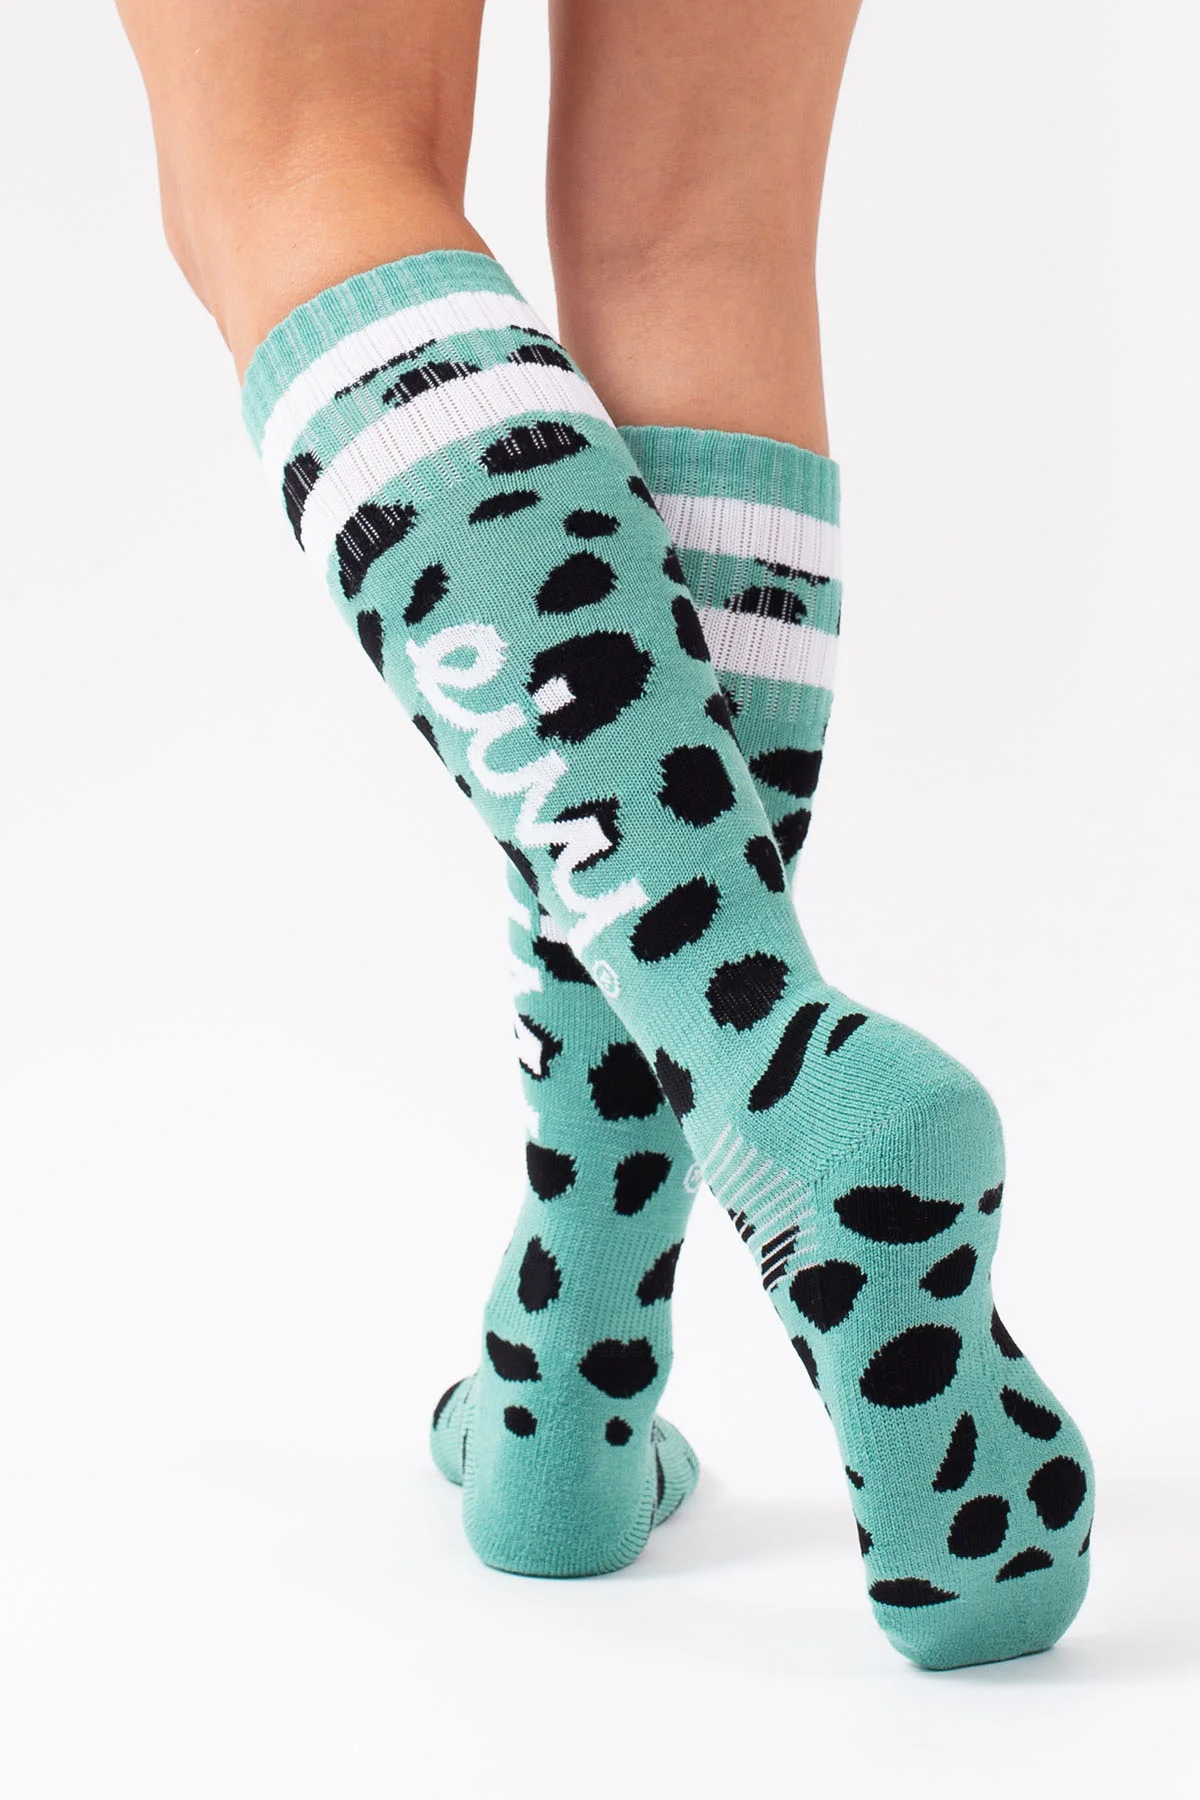 Cheerleader Wool Socks - Turquoise Cheetah | 39-41